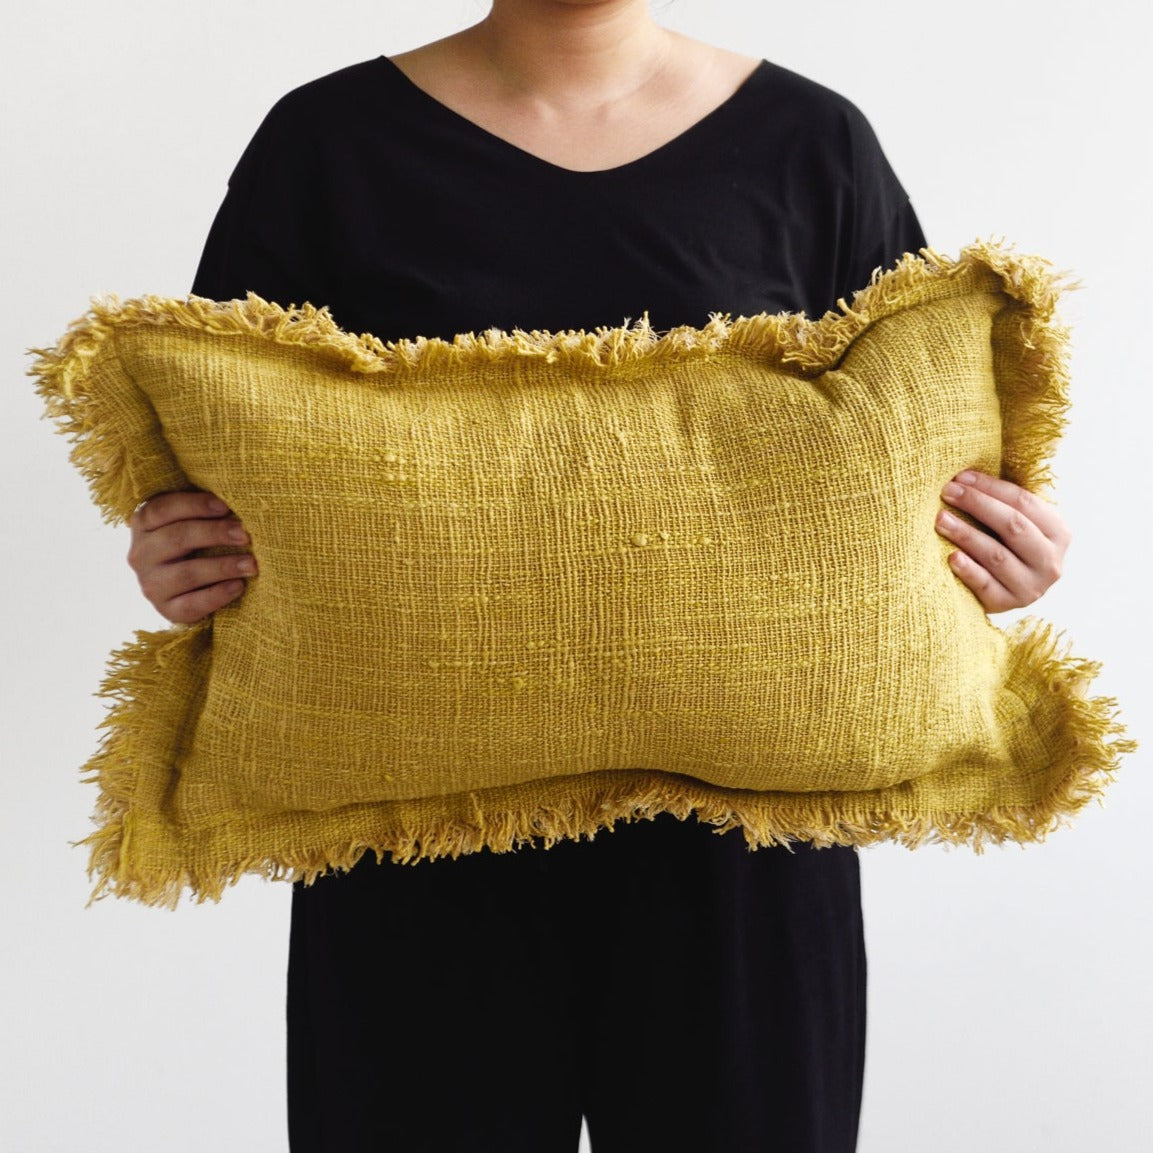 Mustard Amara Cushion - 60cm x 35cm